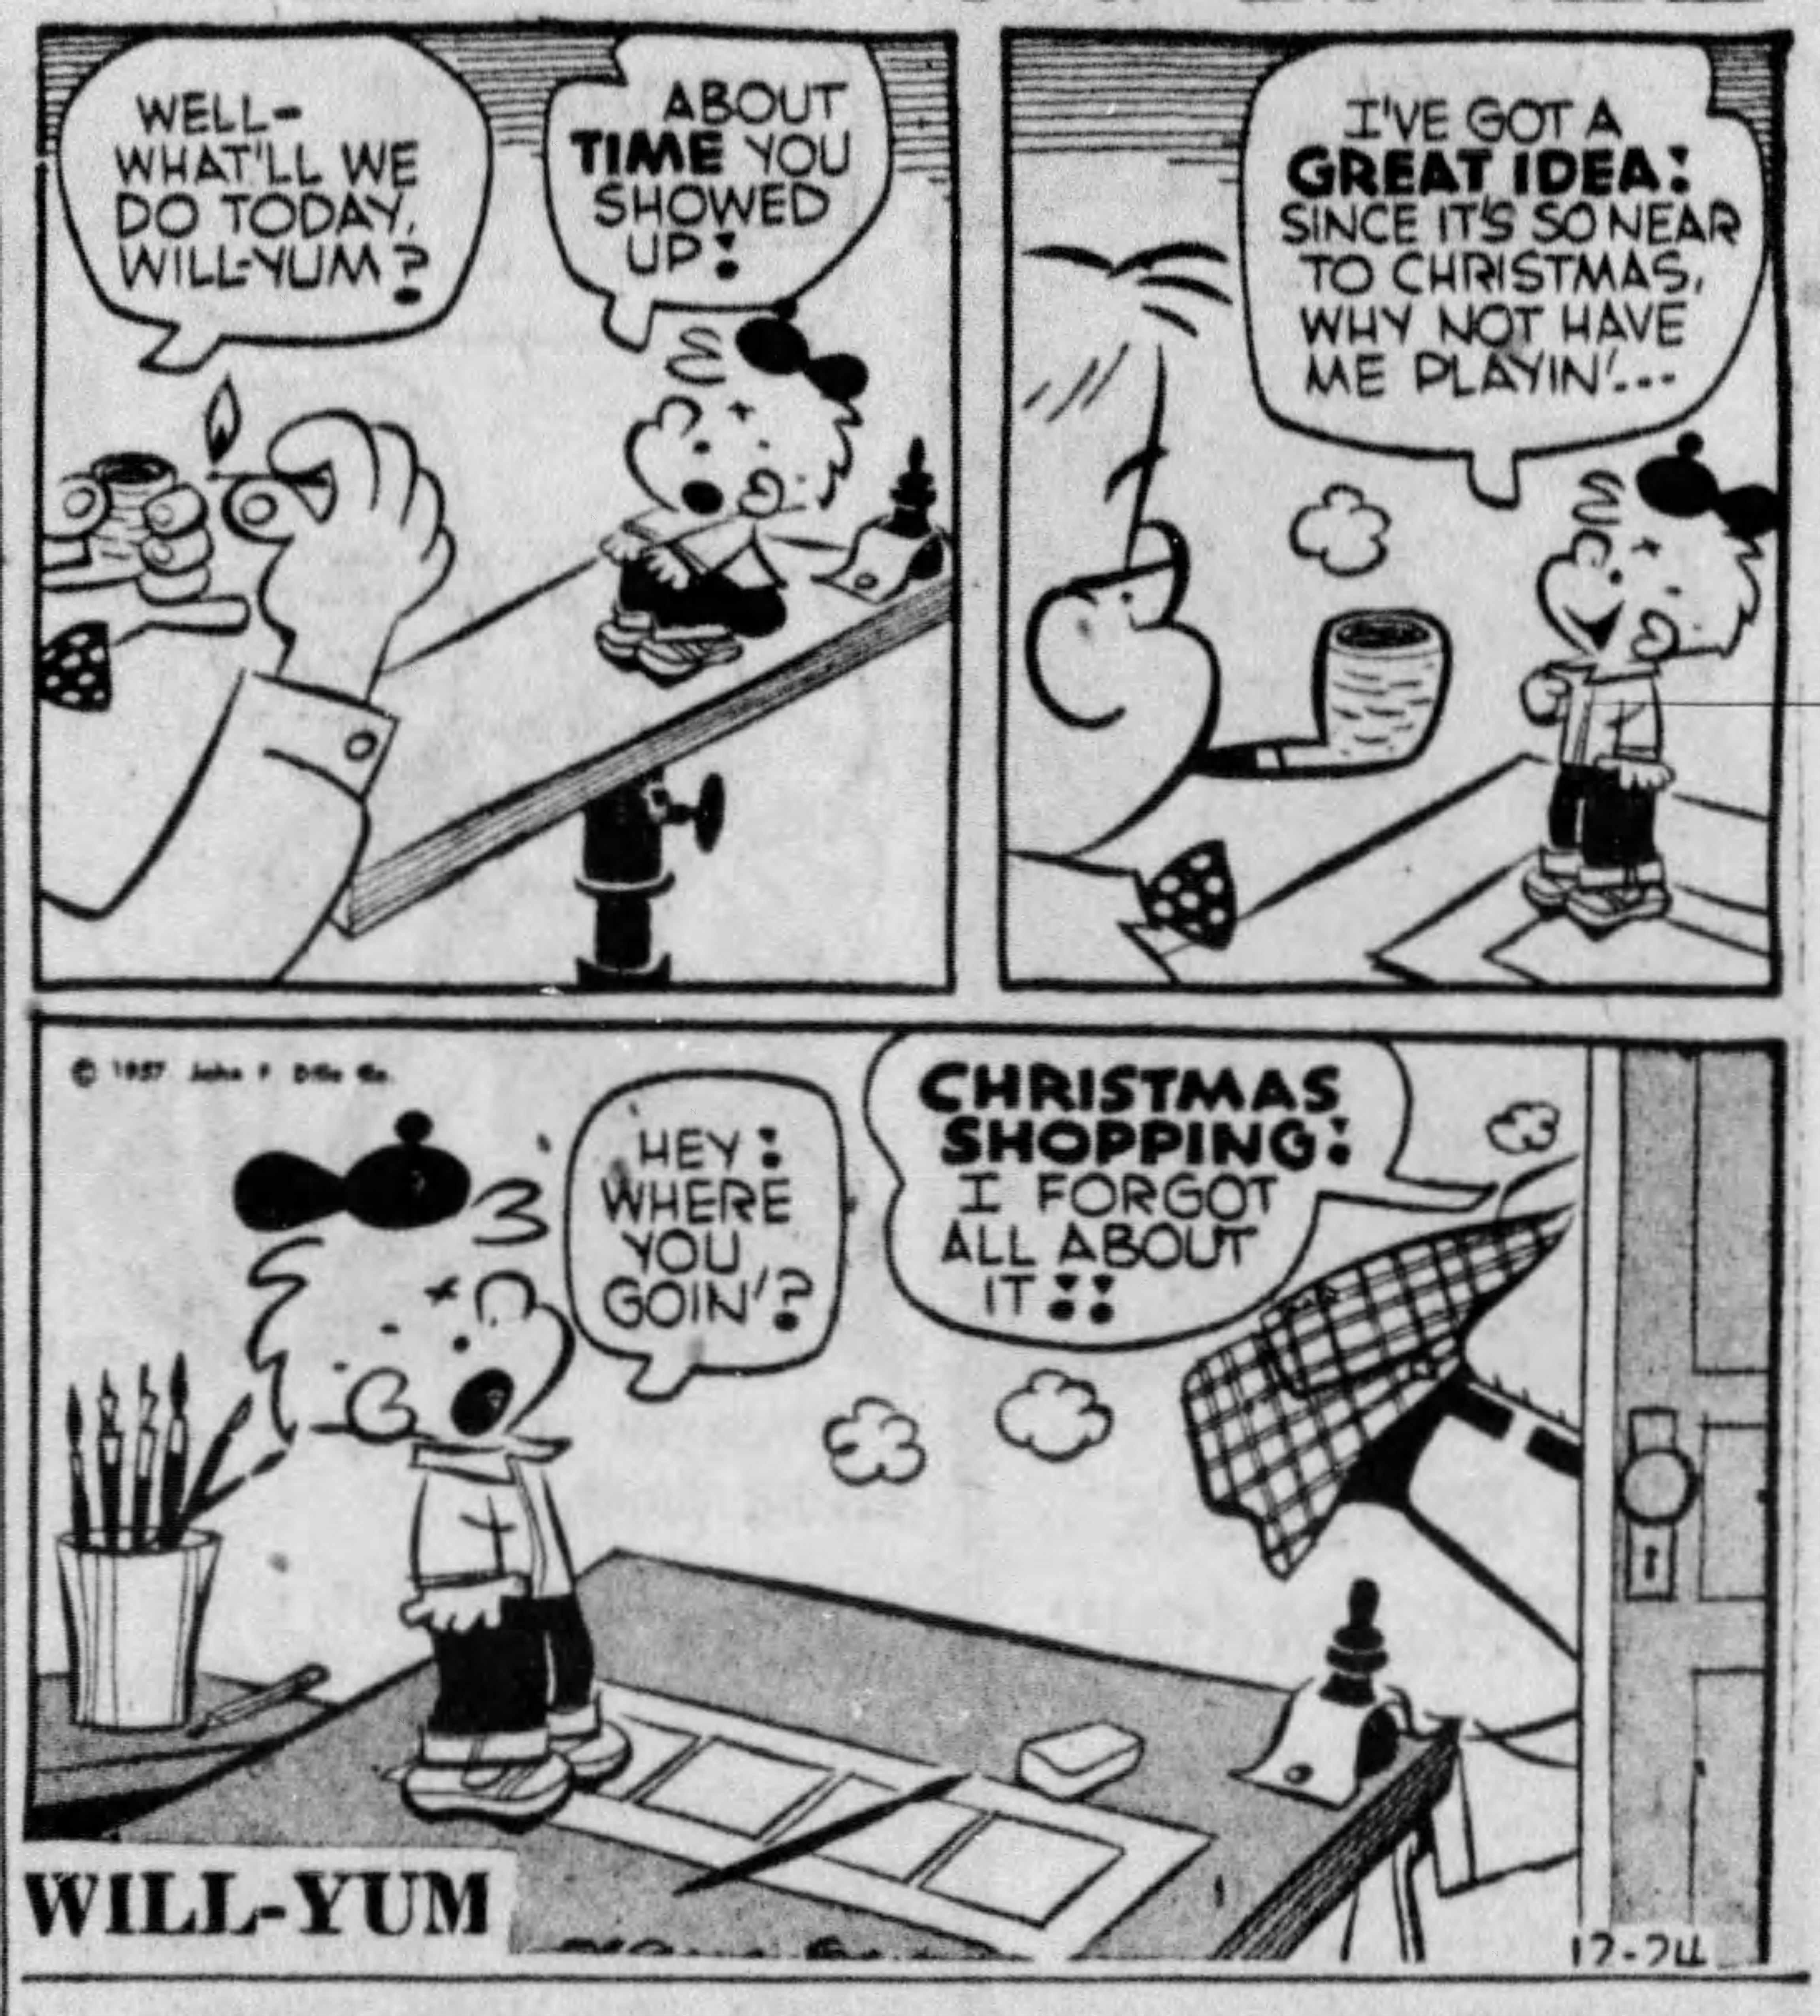 Will-Yum, December 24, 1957